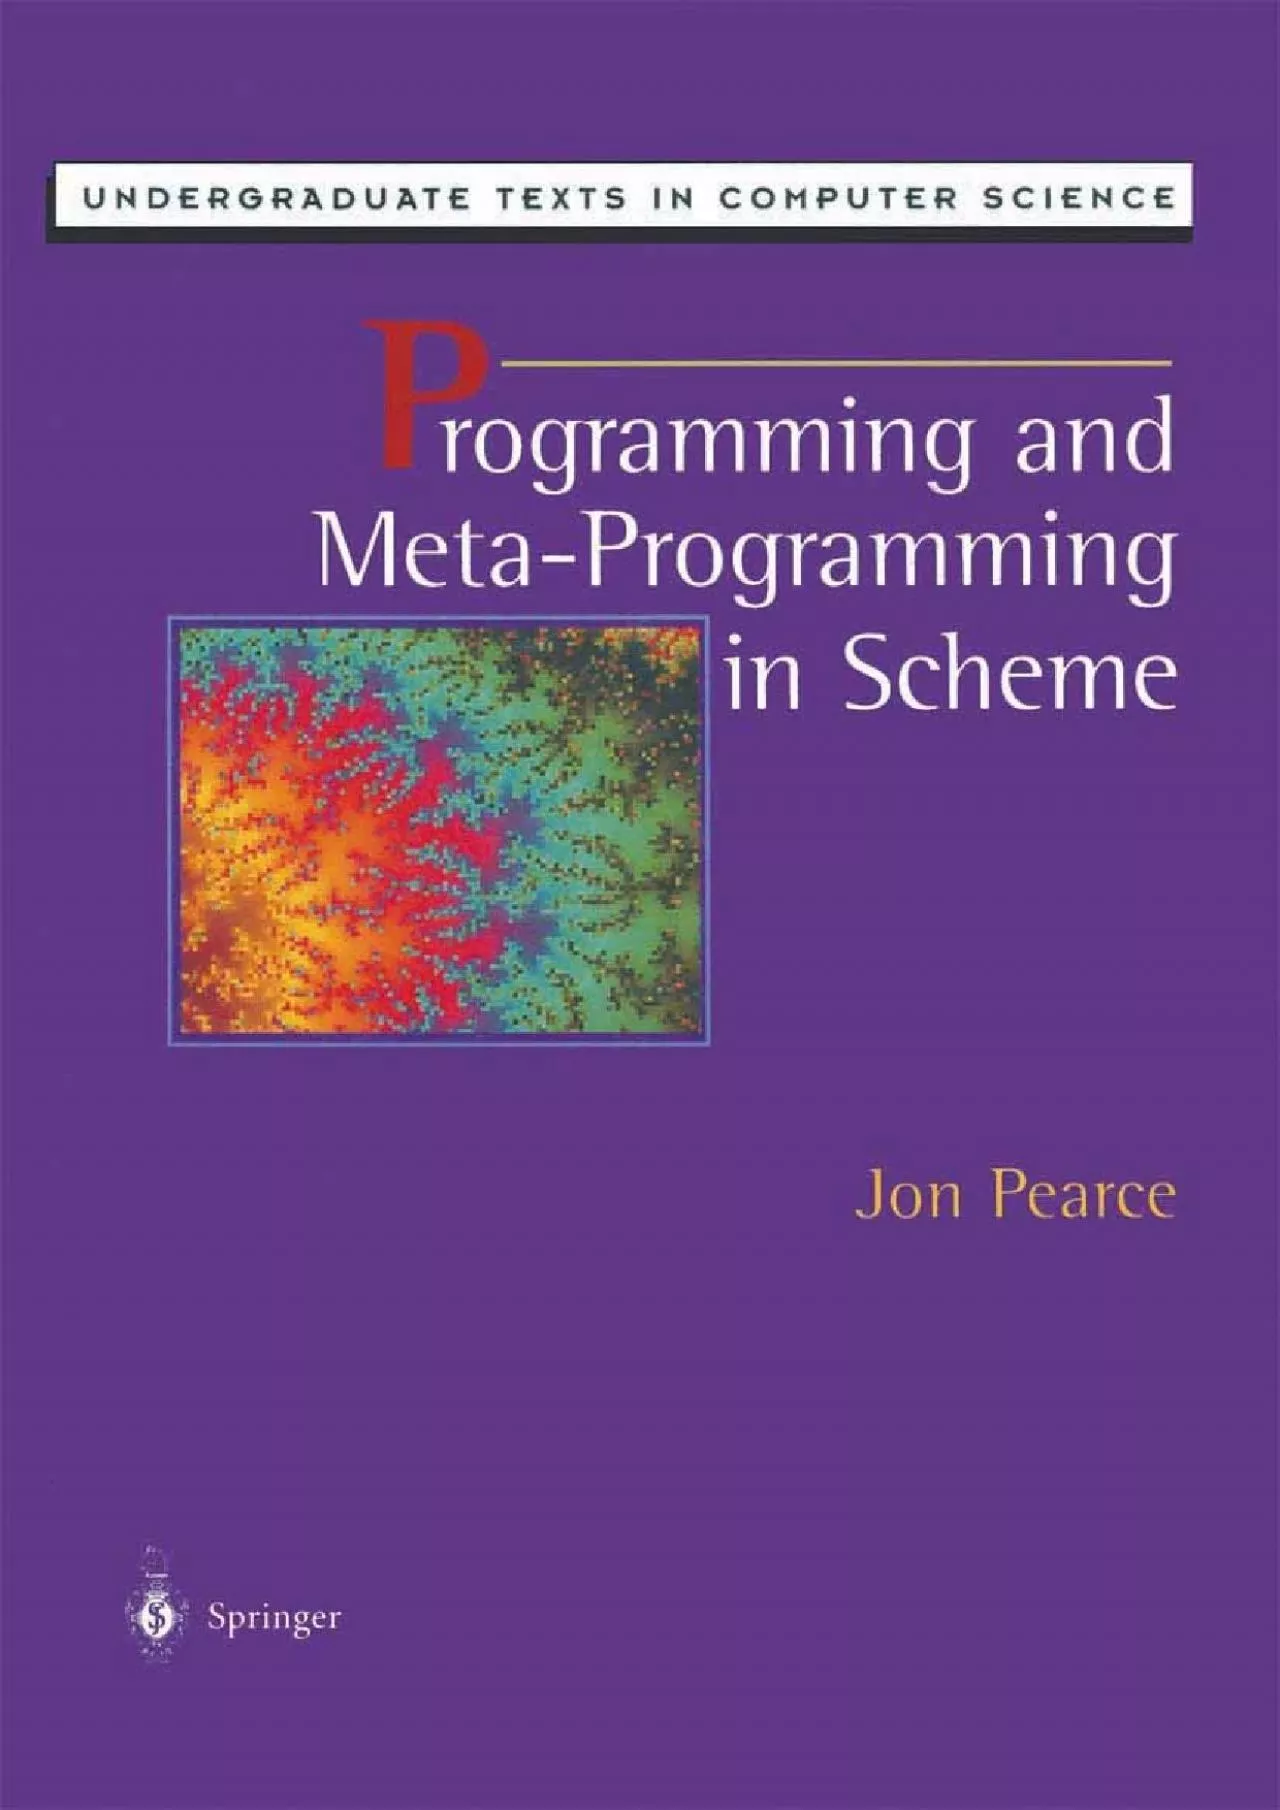 [DOWLOAD]-Programming and Meta-Programming in Scheme (Undergraduate Texts in Computer